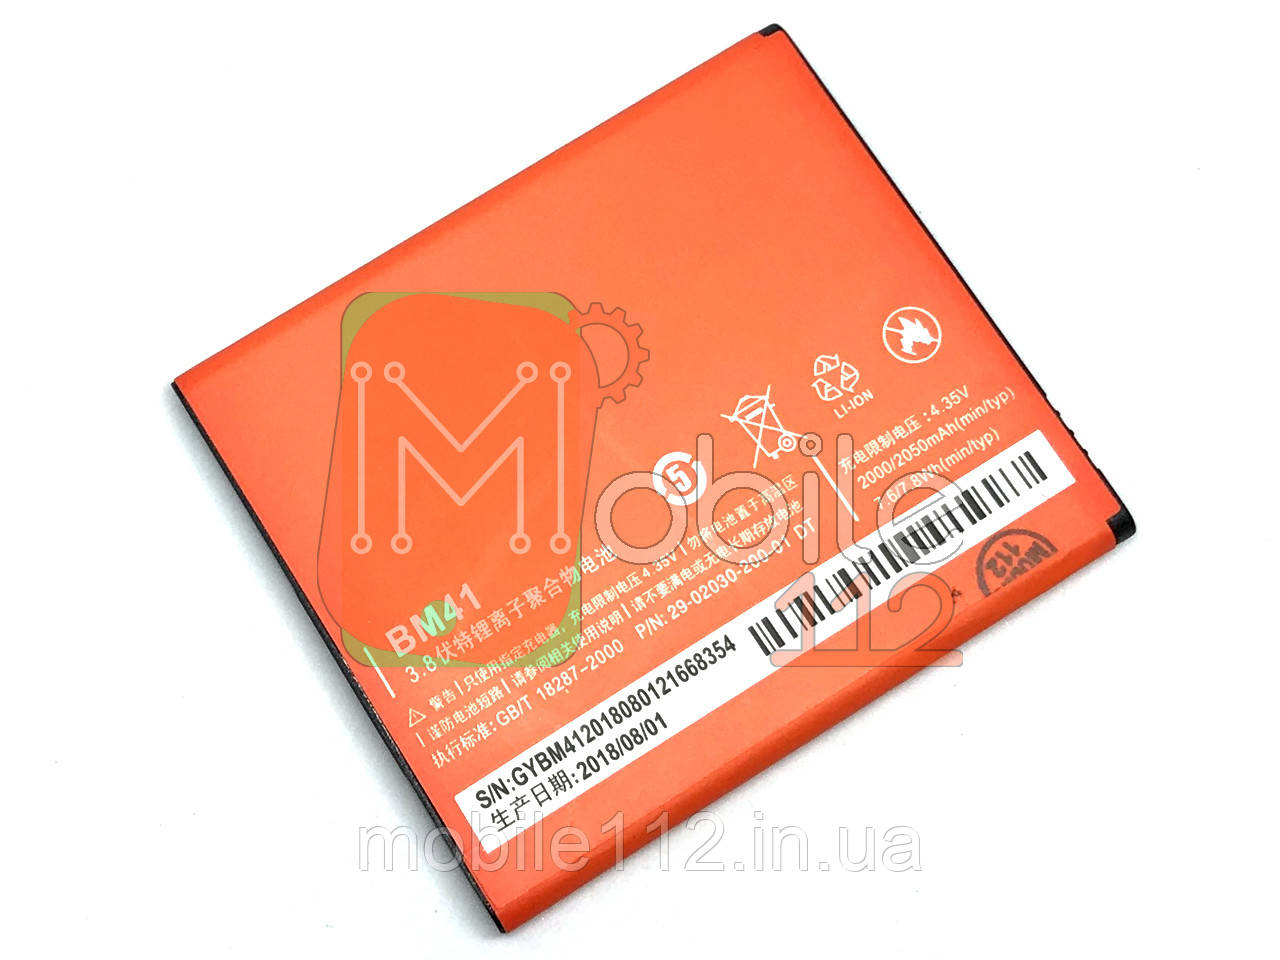 Аккумулятор (АКБ батарея) Xiaomi BM41 оригинал Китай Redmi 1S 2000 mAh